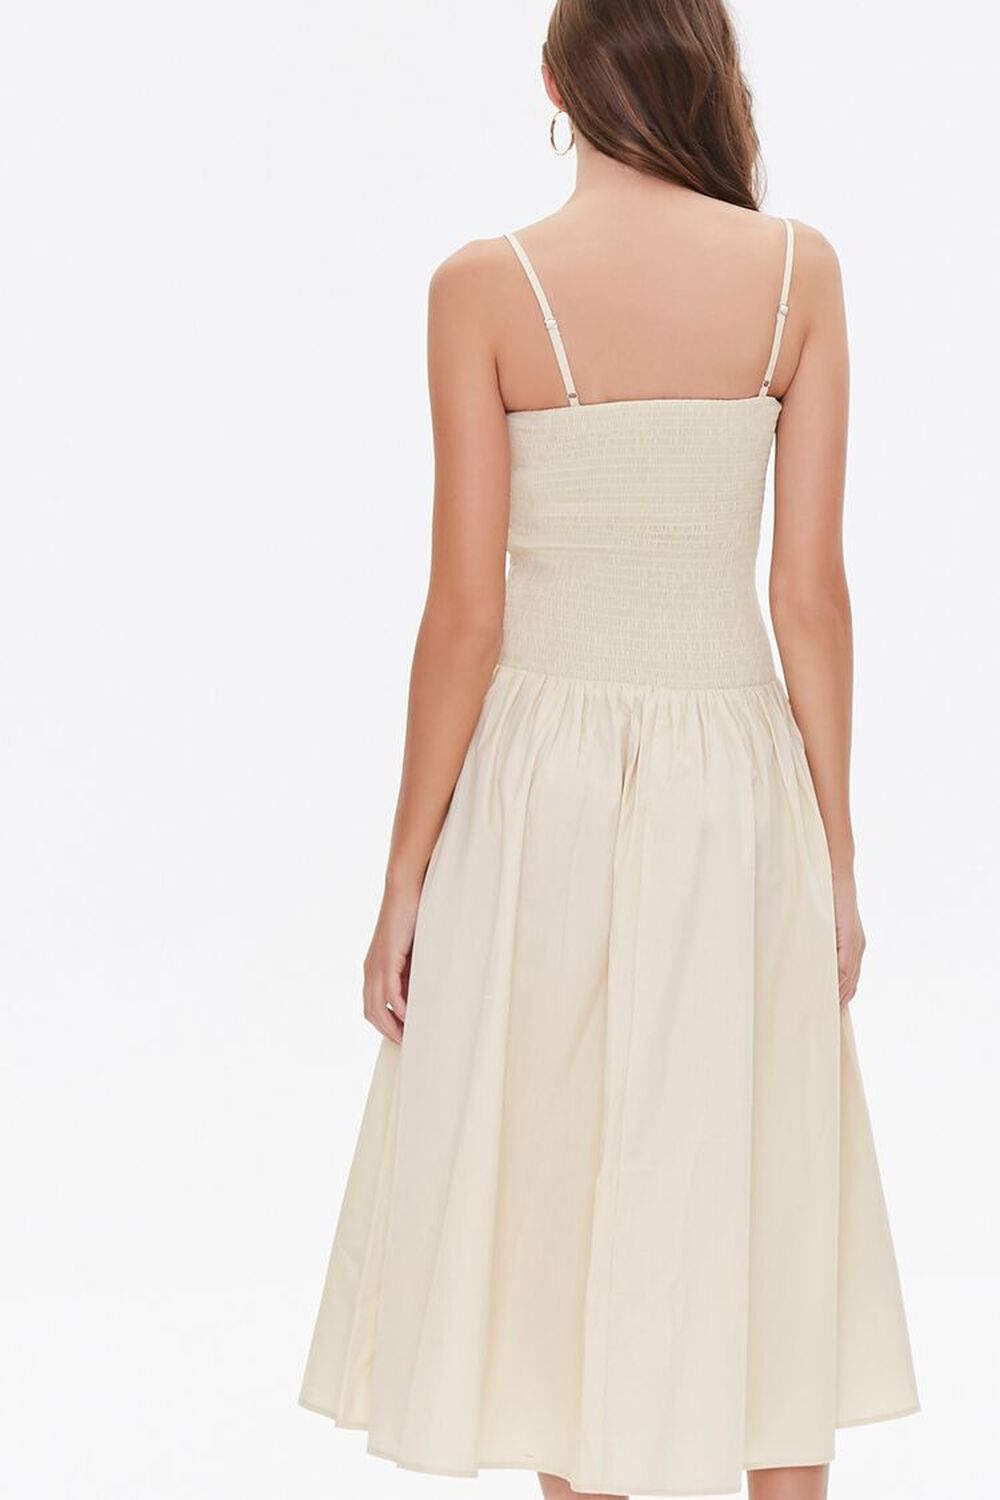 Smocked A-Line Cami Dress, image 3